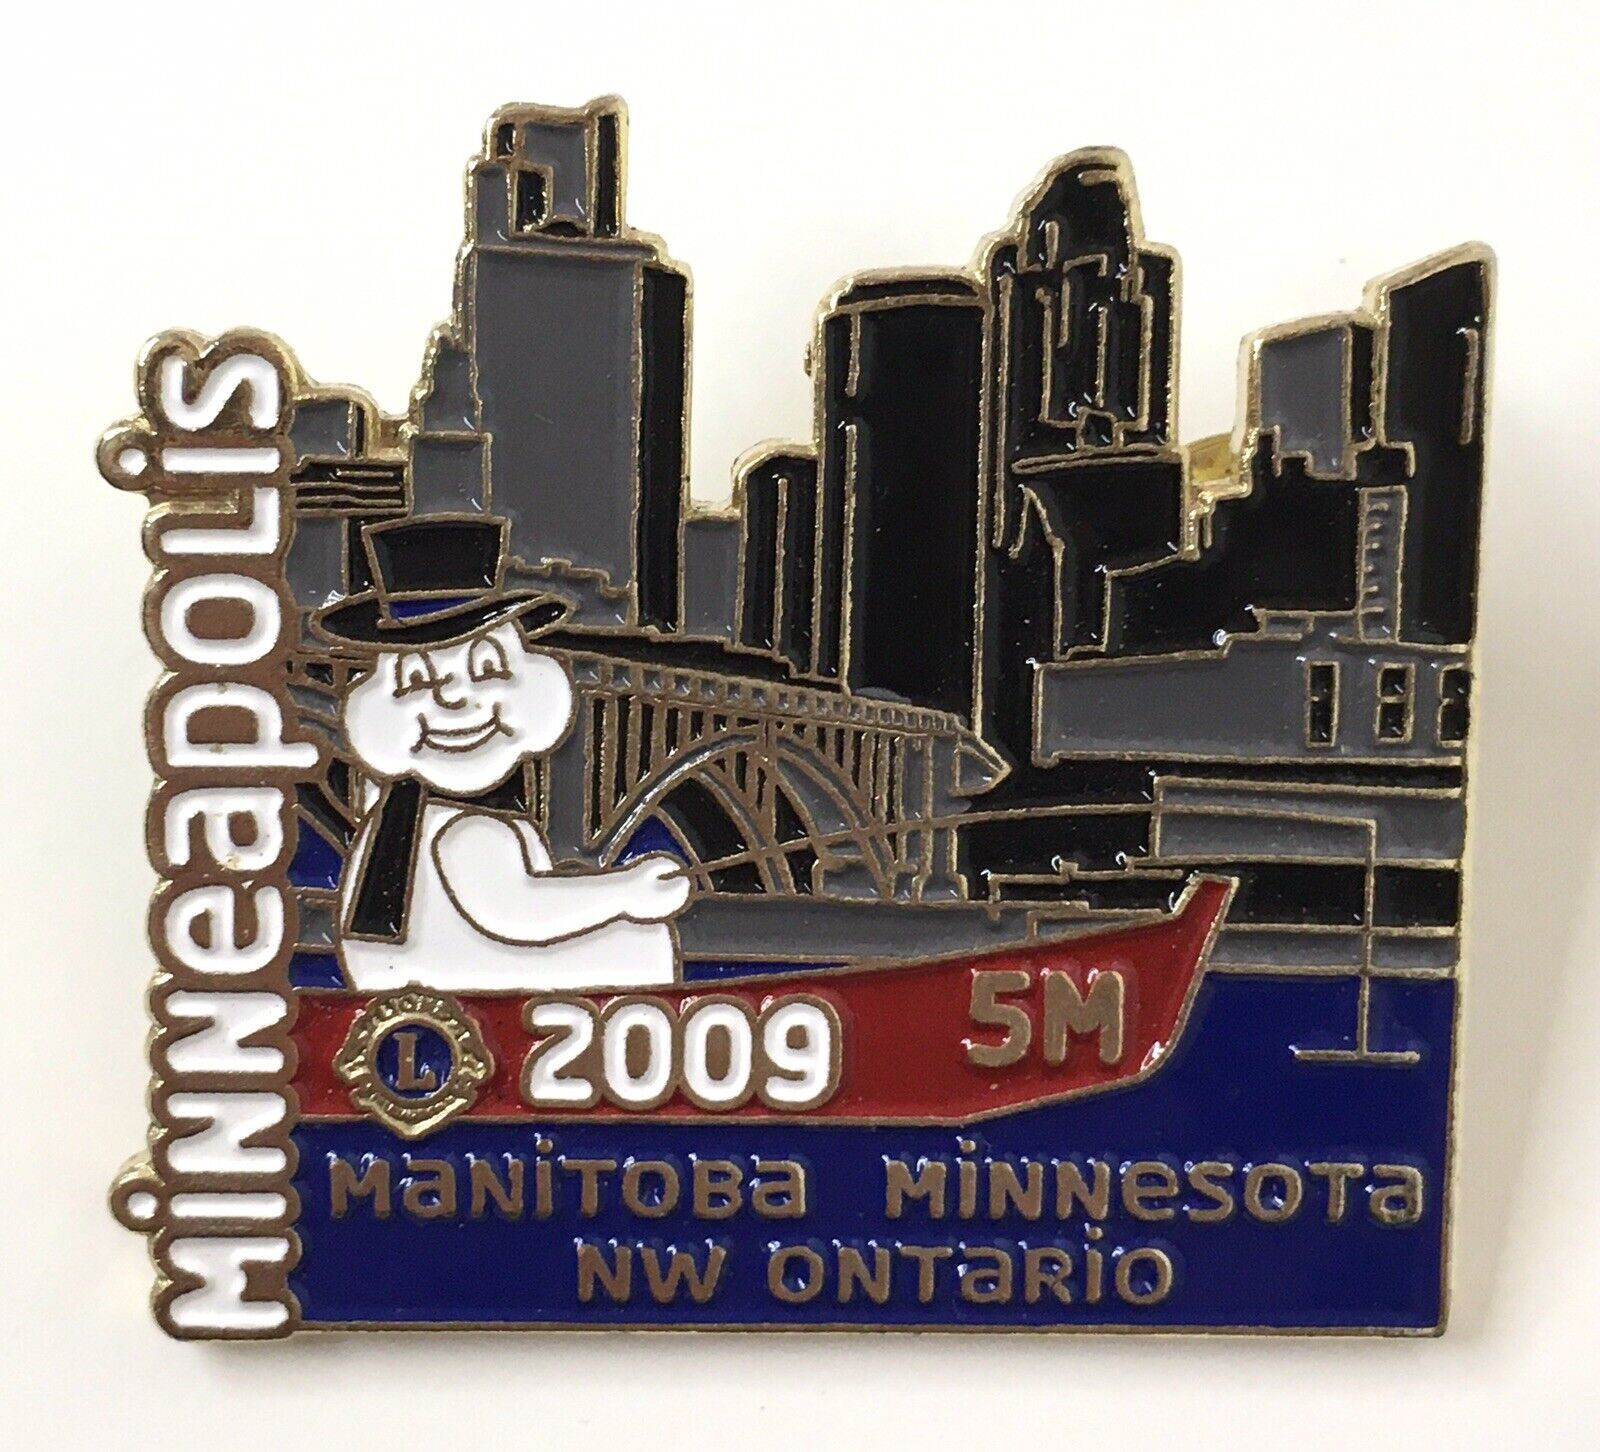 2009 Minneapolis 5M Manitoba Minnesota NW Ontario Snowman On Boat Lions Club Pin